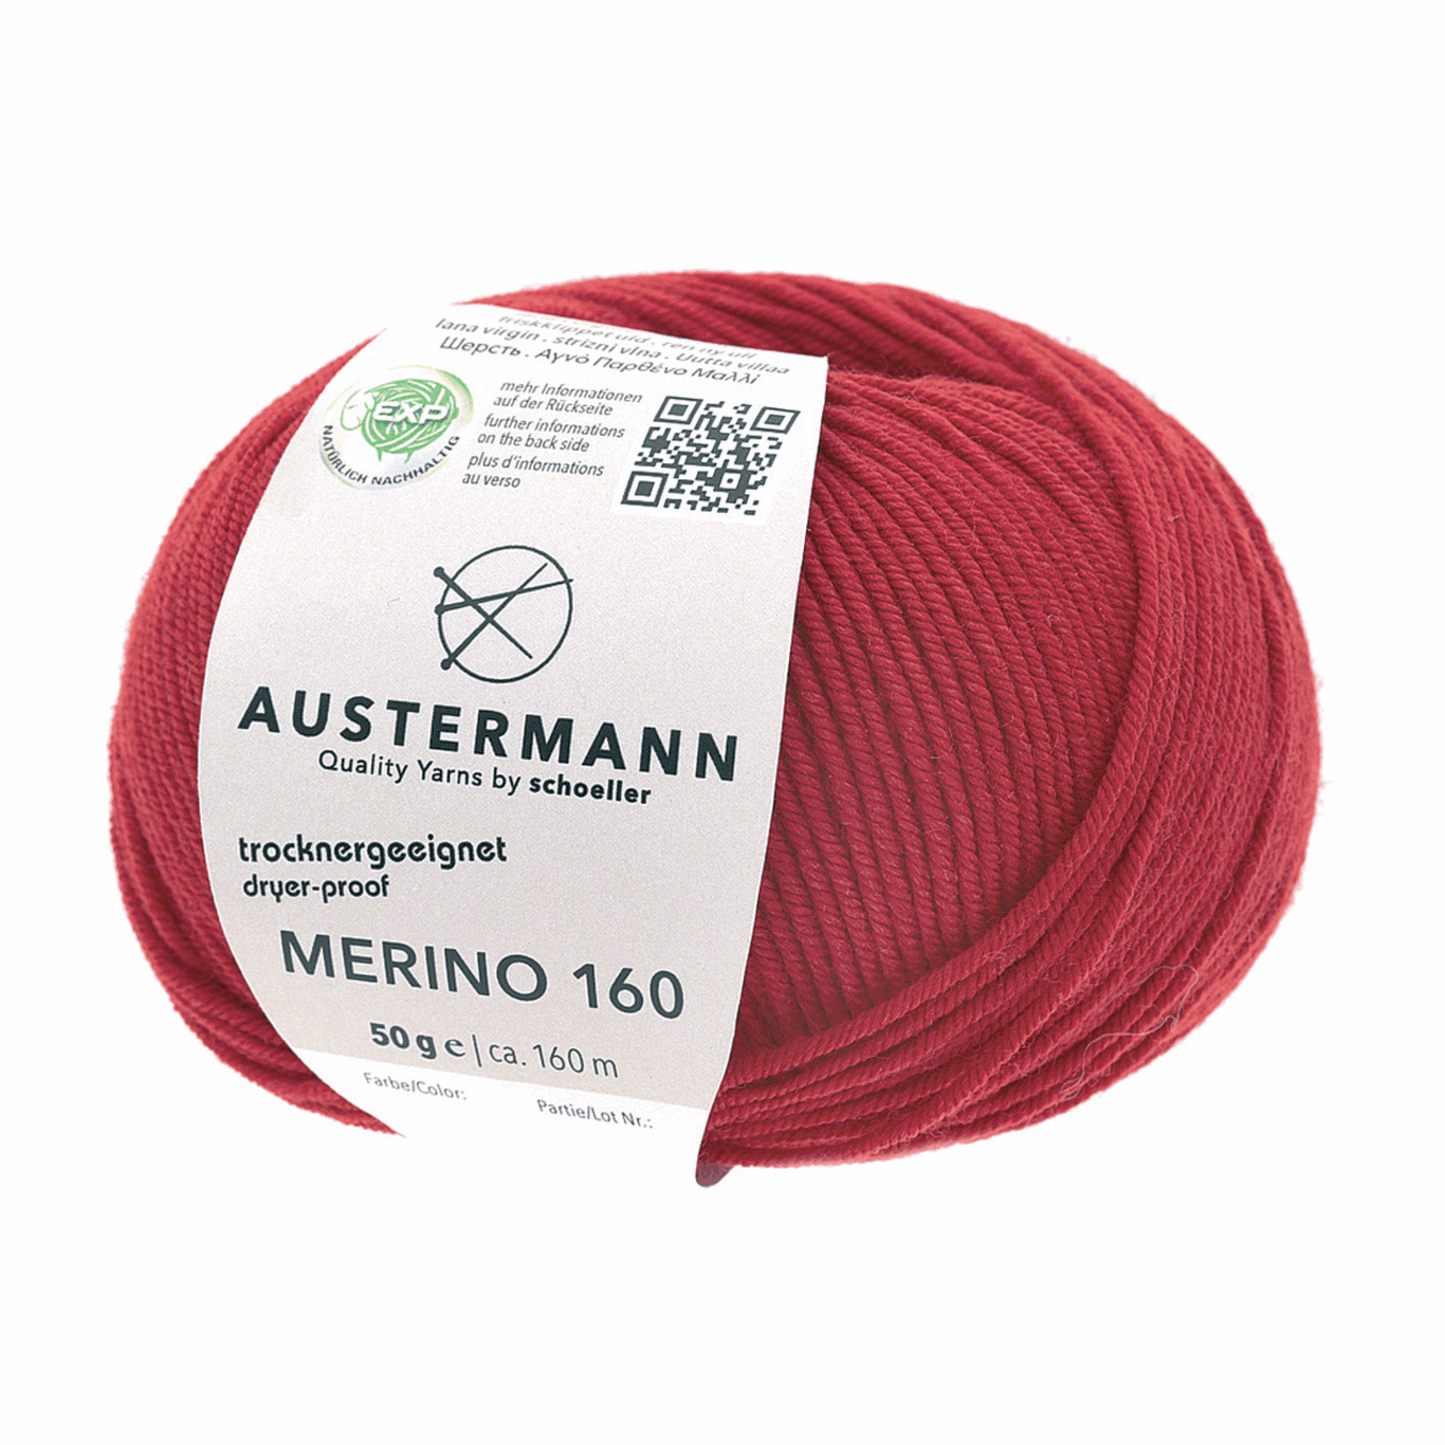 Austermann Merino 160 EXP 50g, 97610, Farbe rubin 230